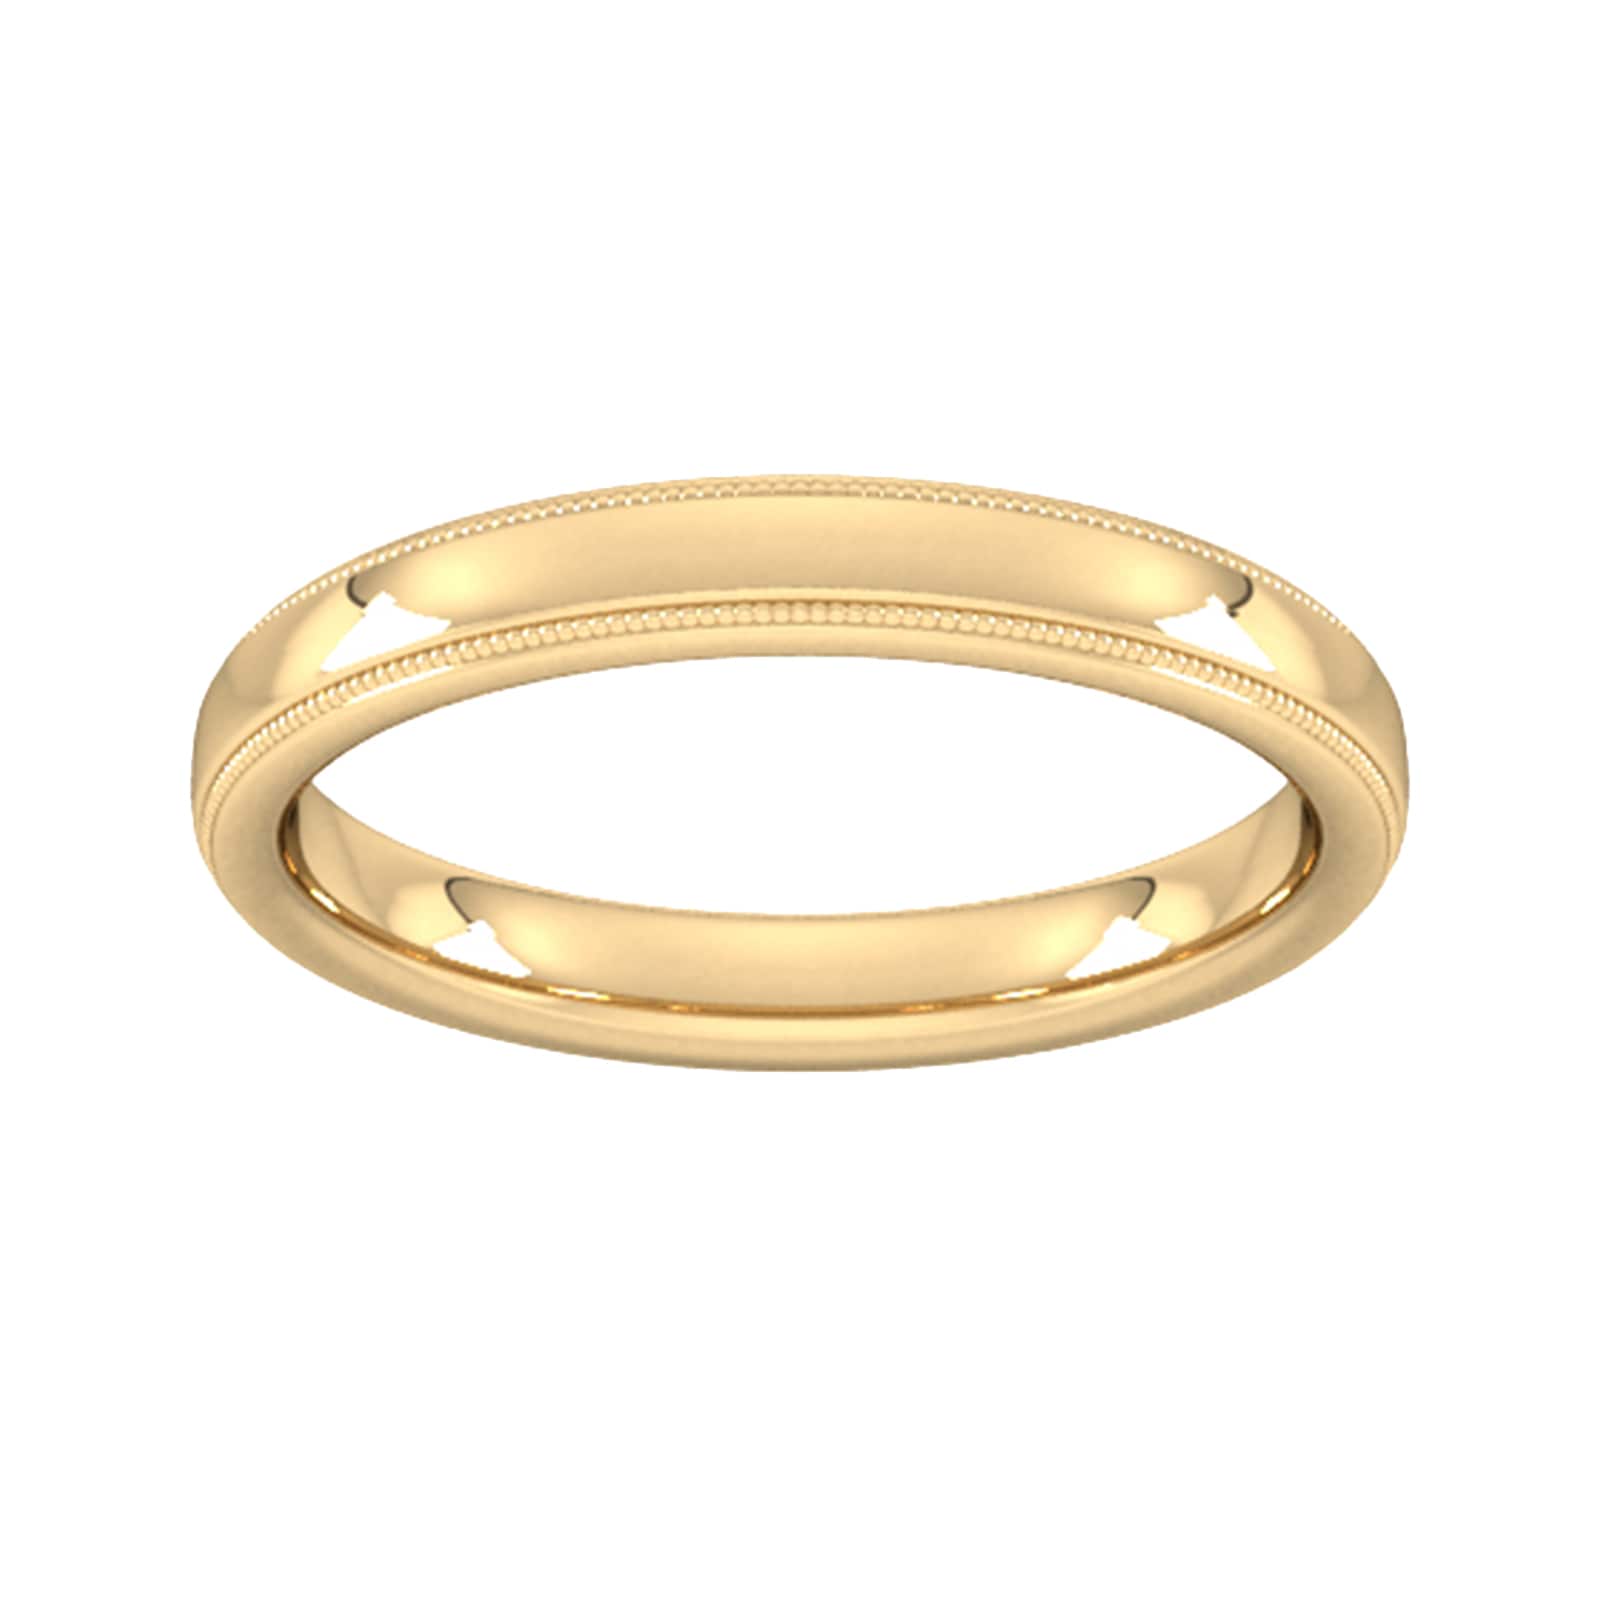 3mm Slight Court Heavy Milgrain Edge Wedding Ring In 18 Carat Yellow Gold - Ring Size S